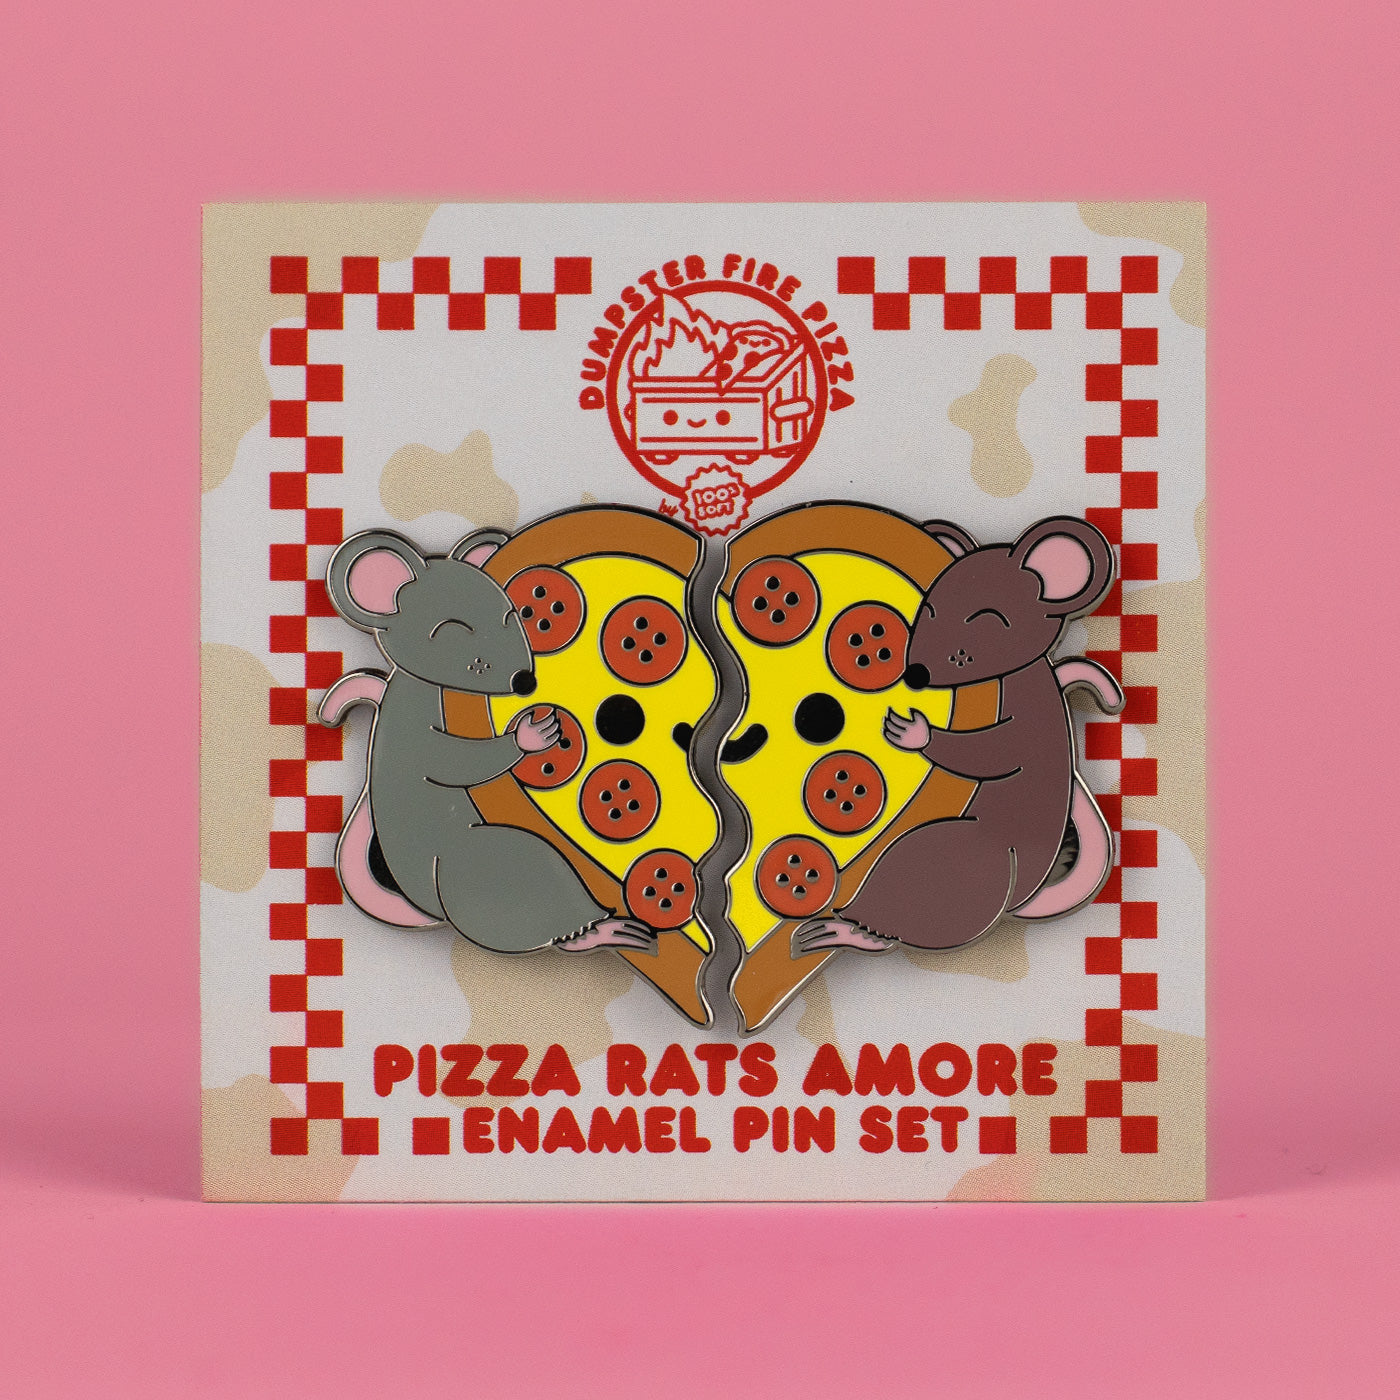 Pizza Rats Amore Enamel Pin